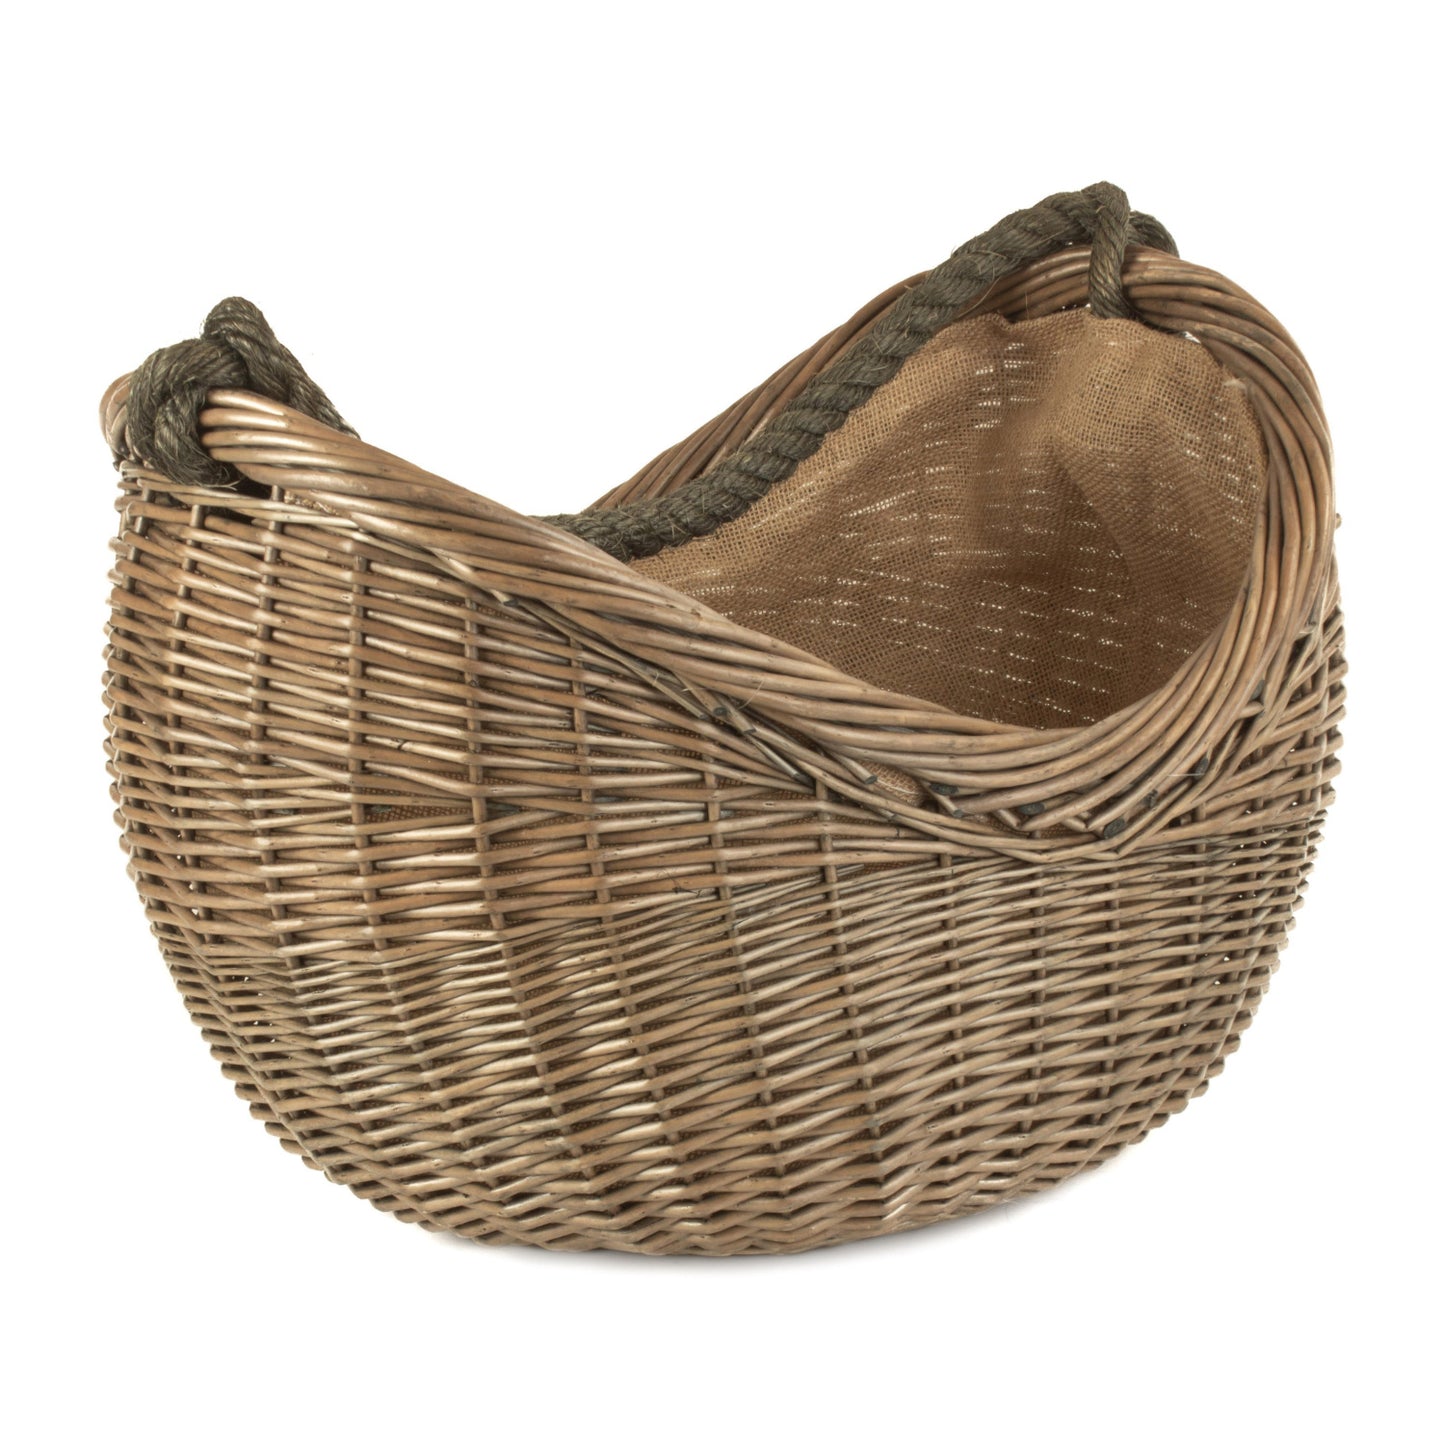 Antique Wash Rope Handled Carrying Basket